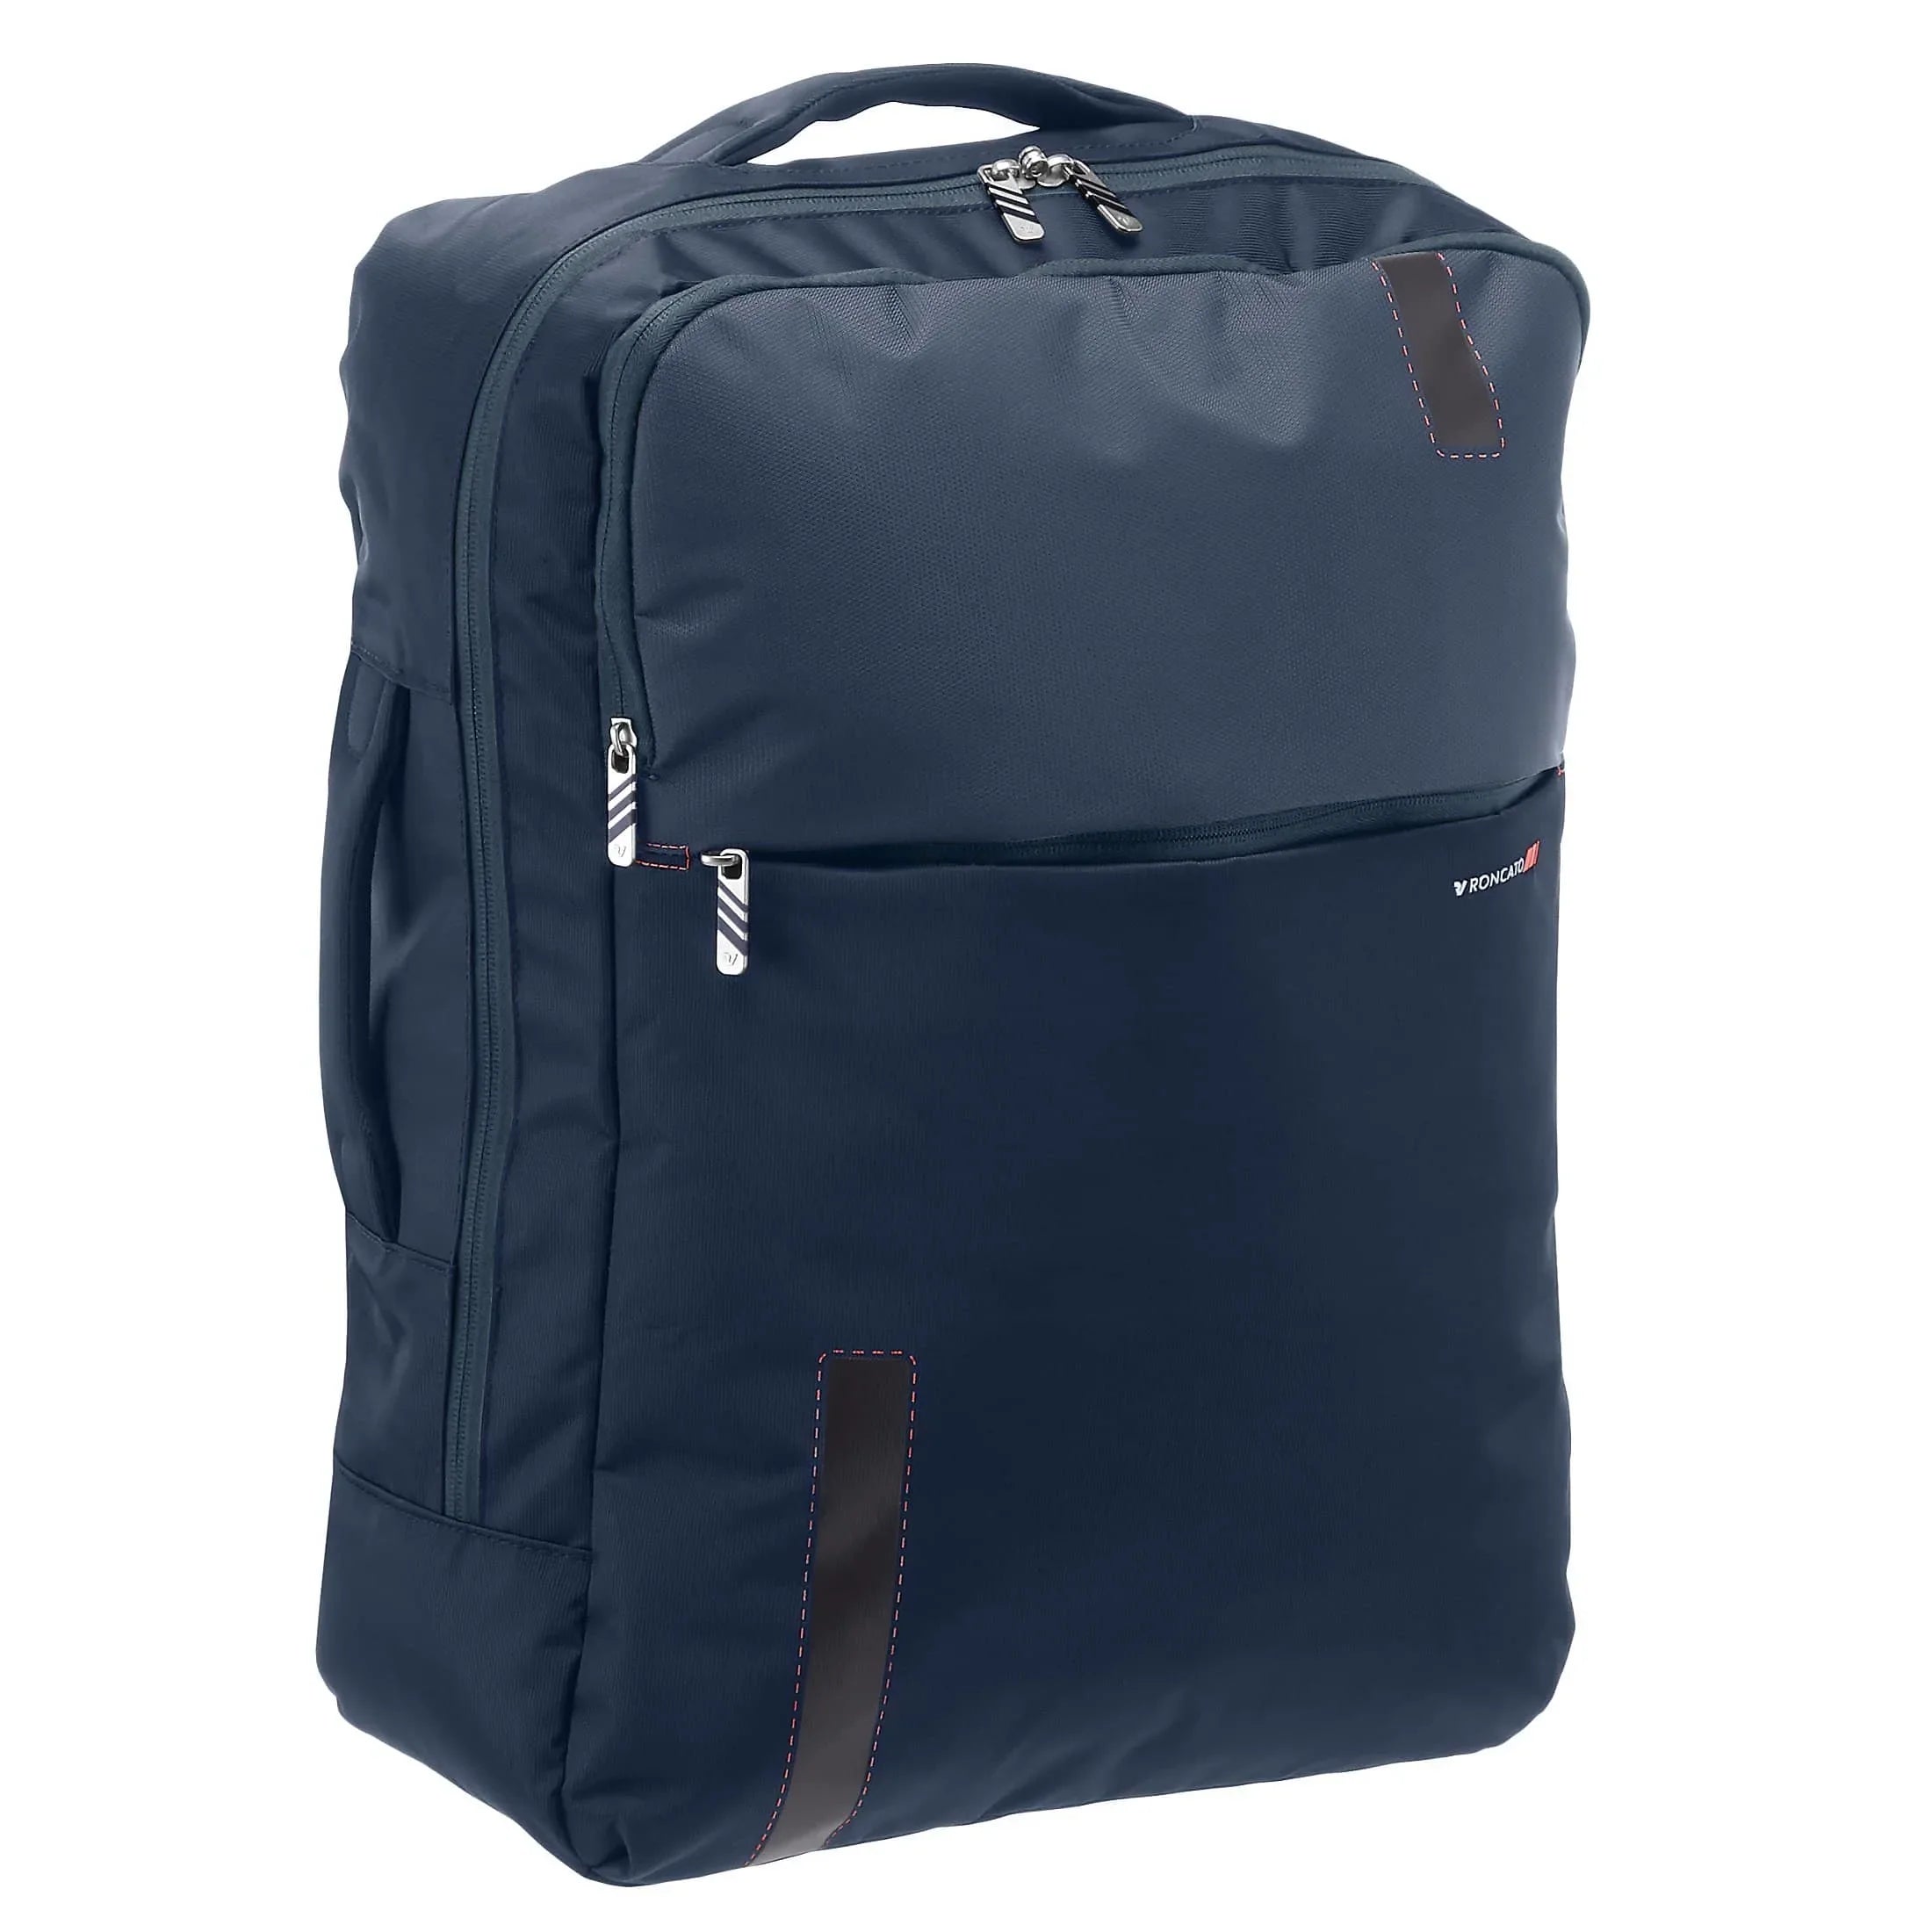 Roncato Speed backpack 55 cm - blue